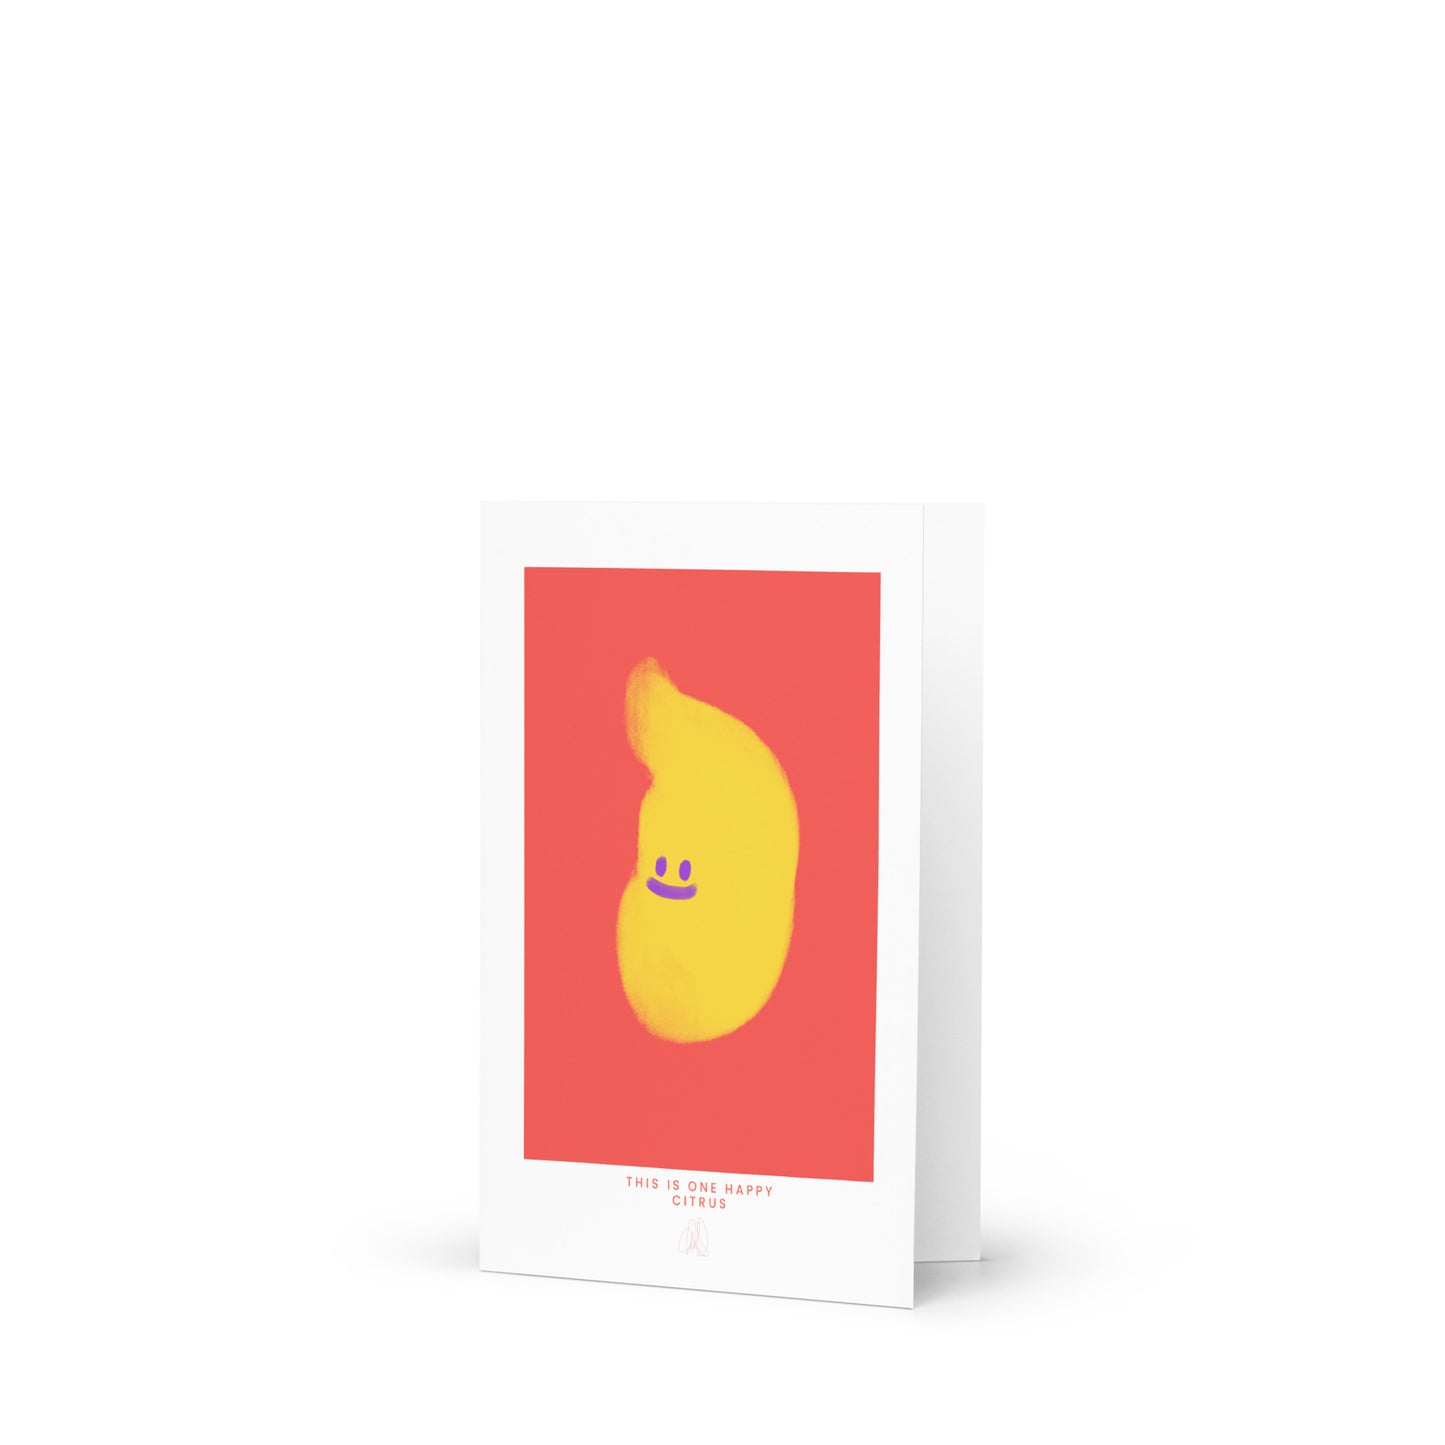 One Happy Citrus Greeting card - HiPosterShop